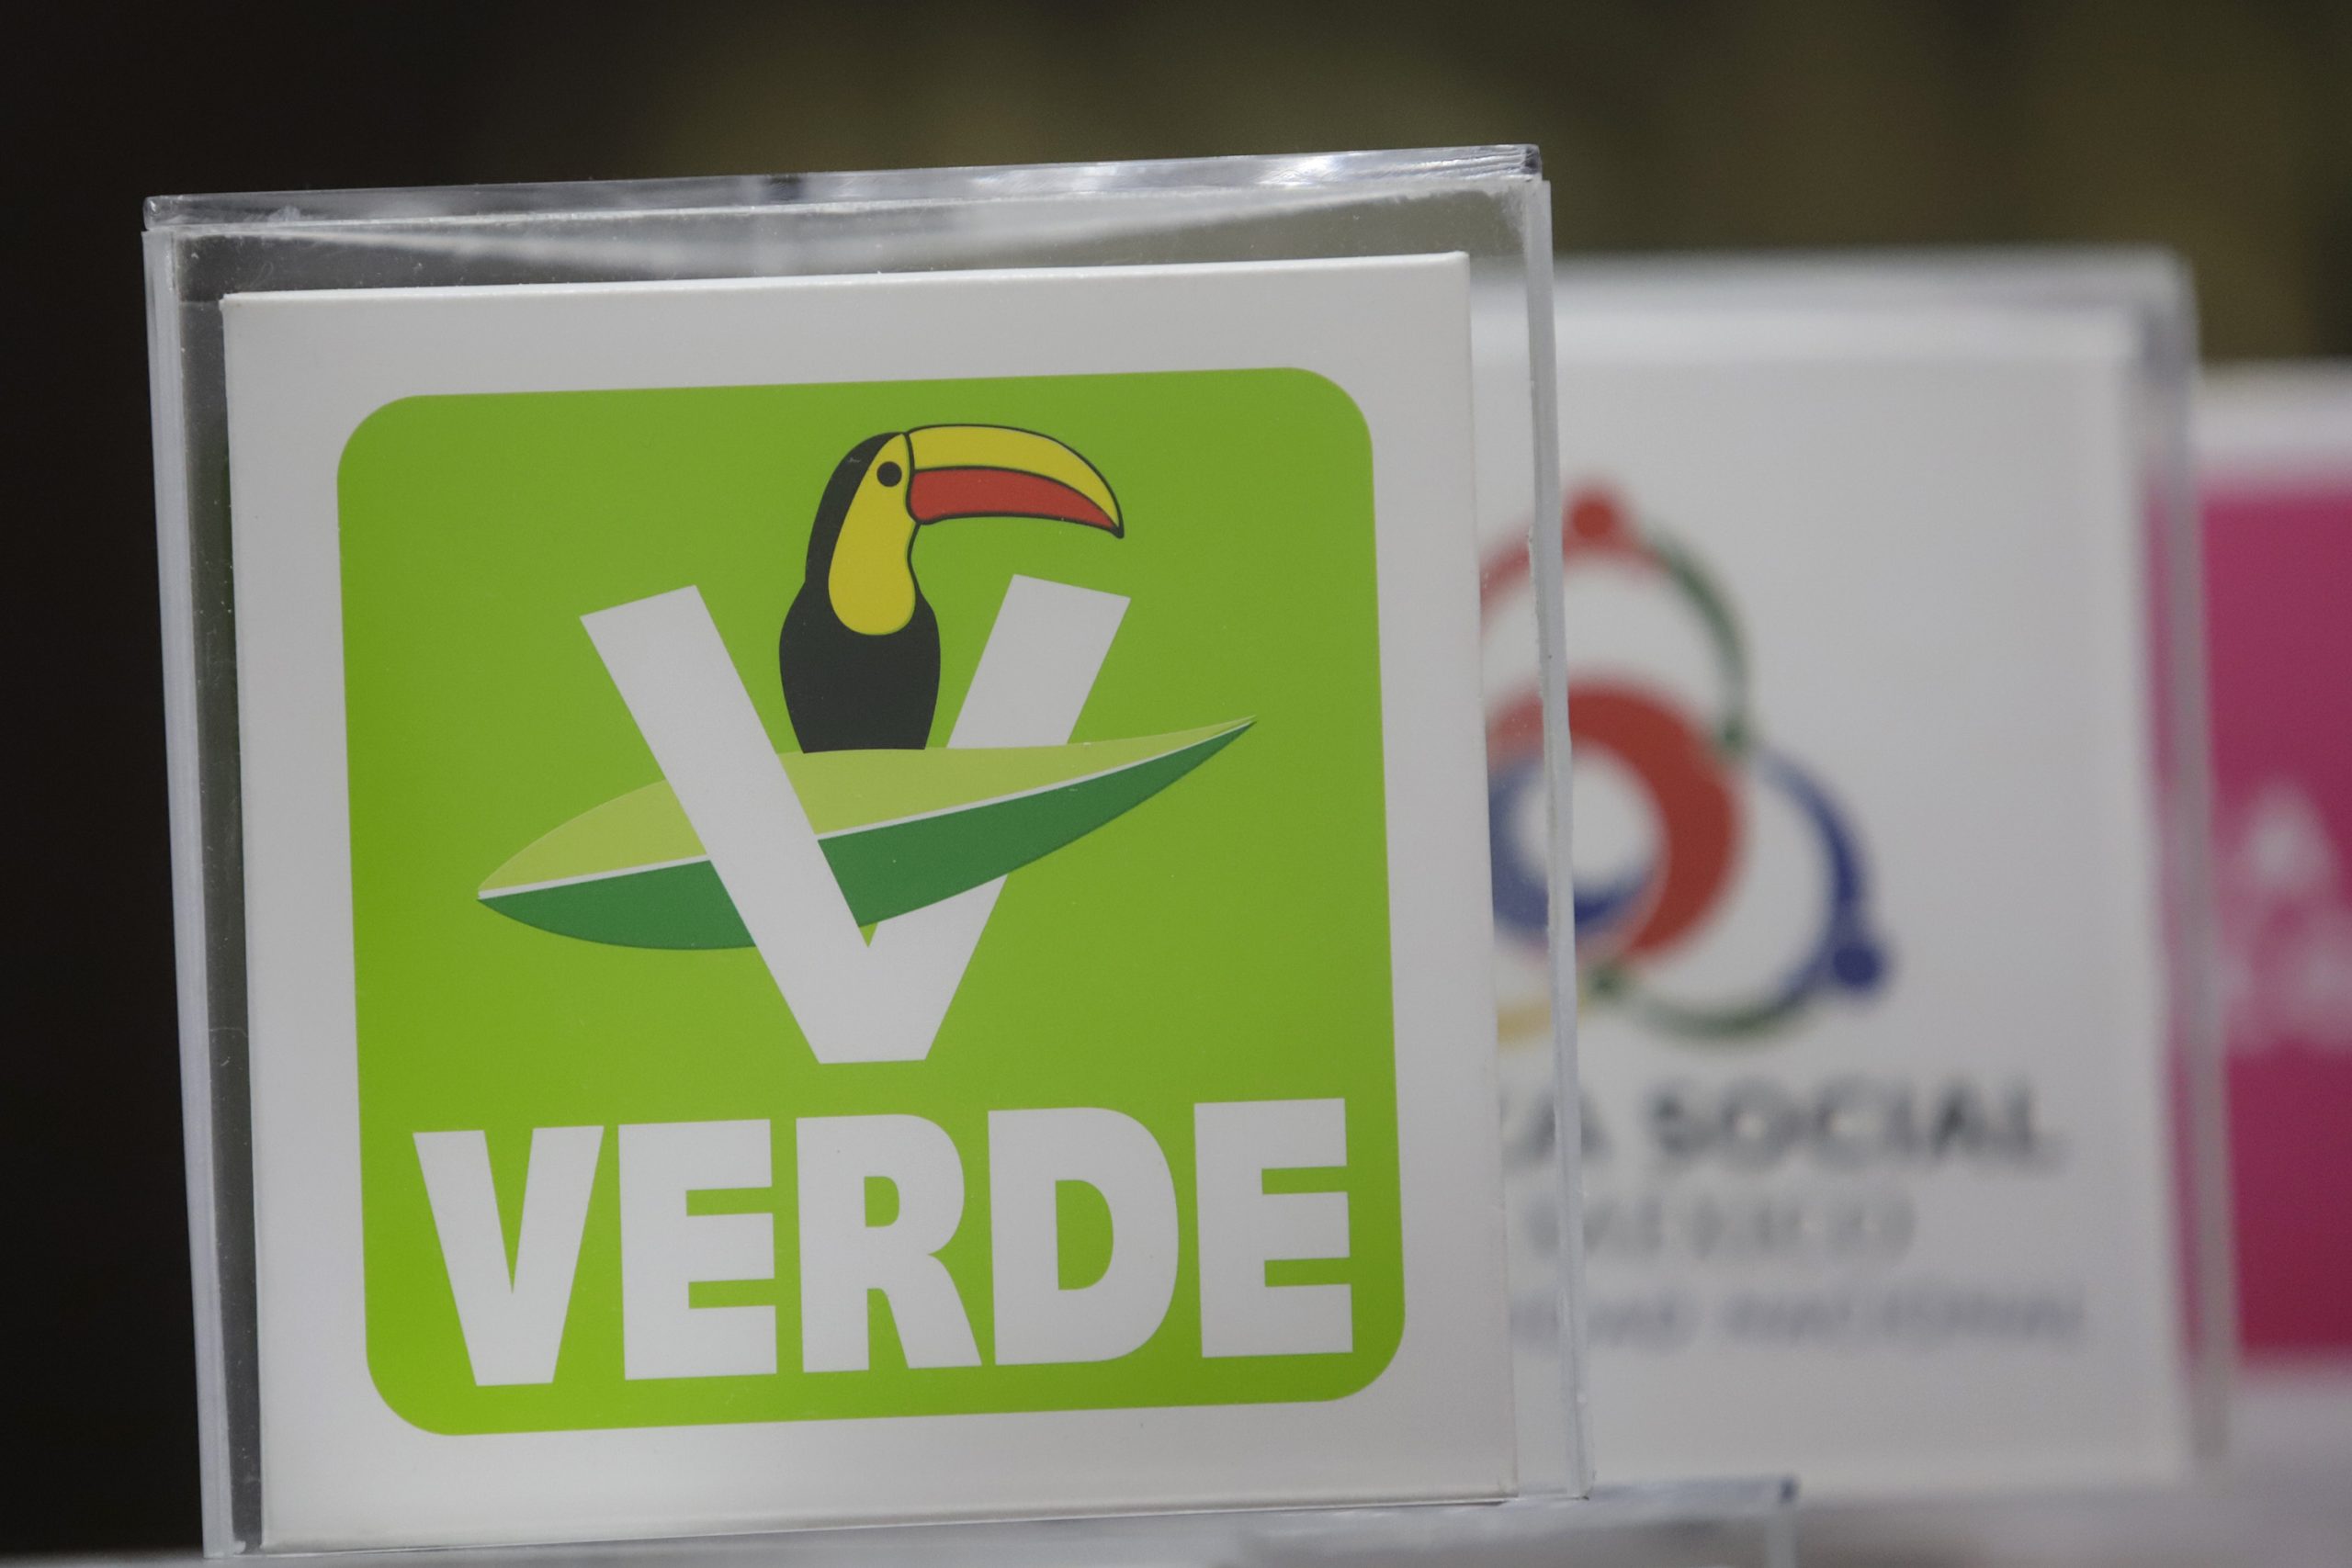 PVEM pide que aspirantes a candidaturas tengan congruencia como Ebrard